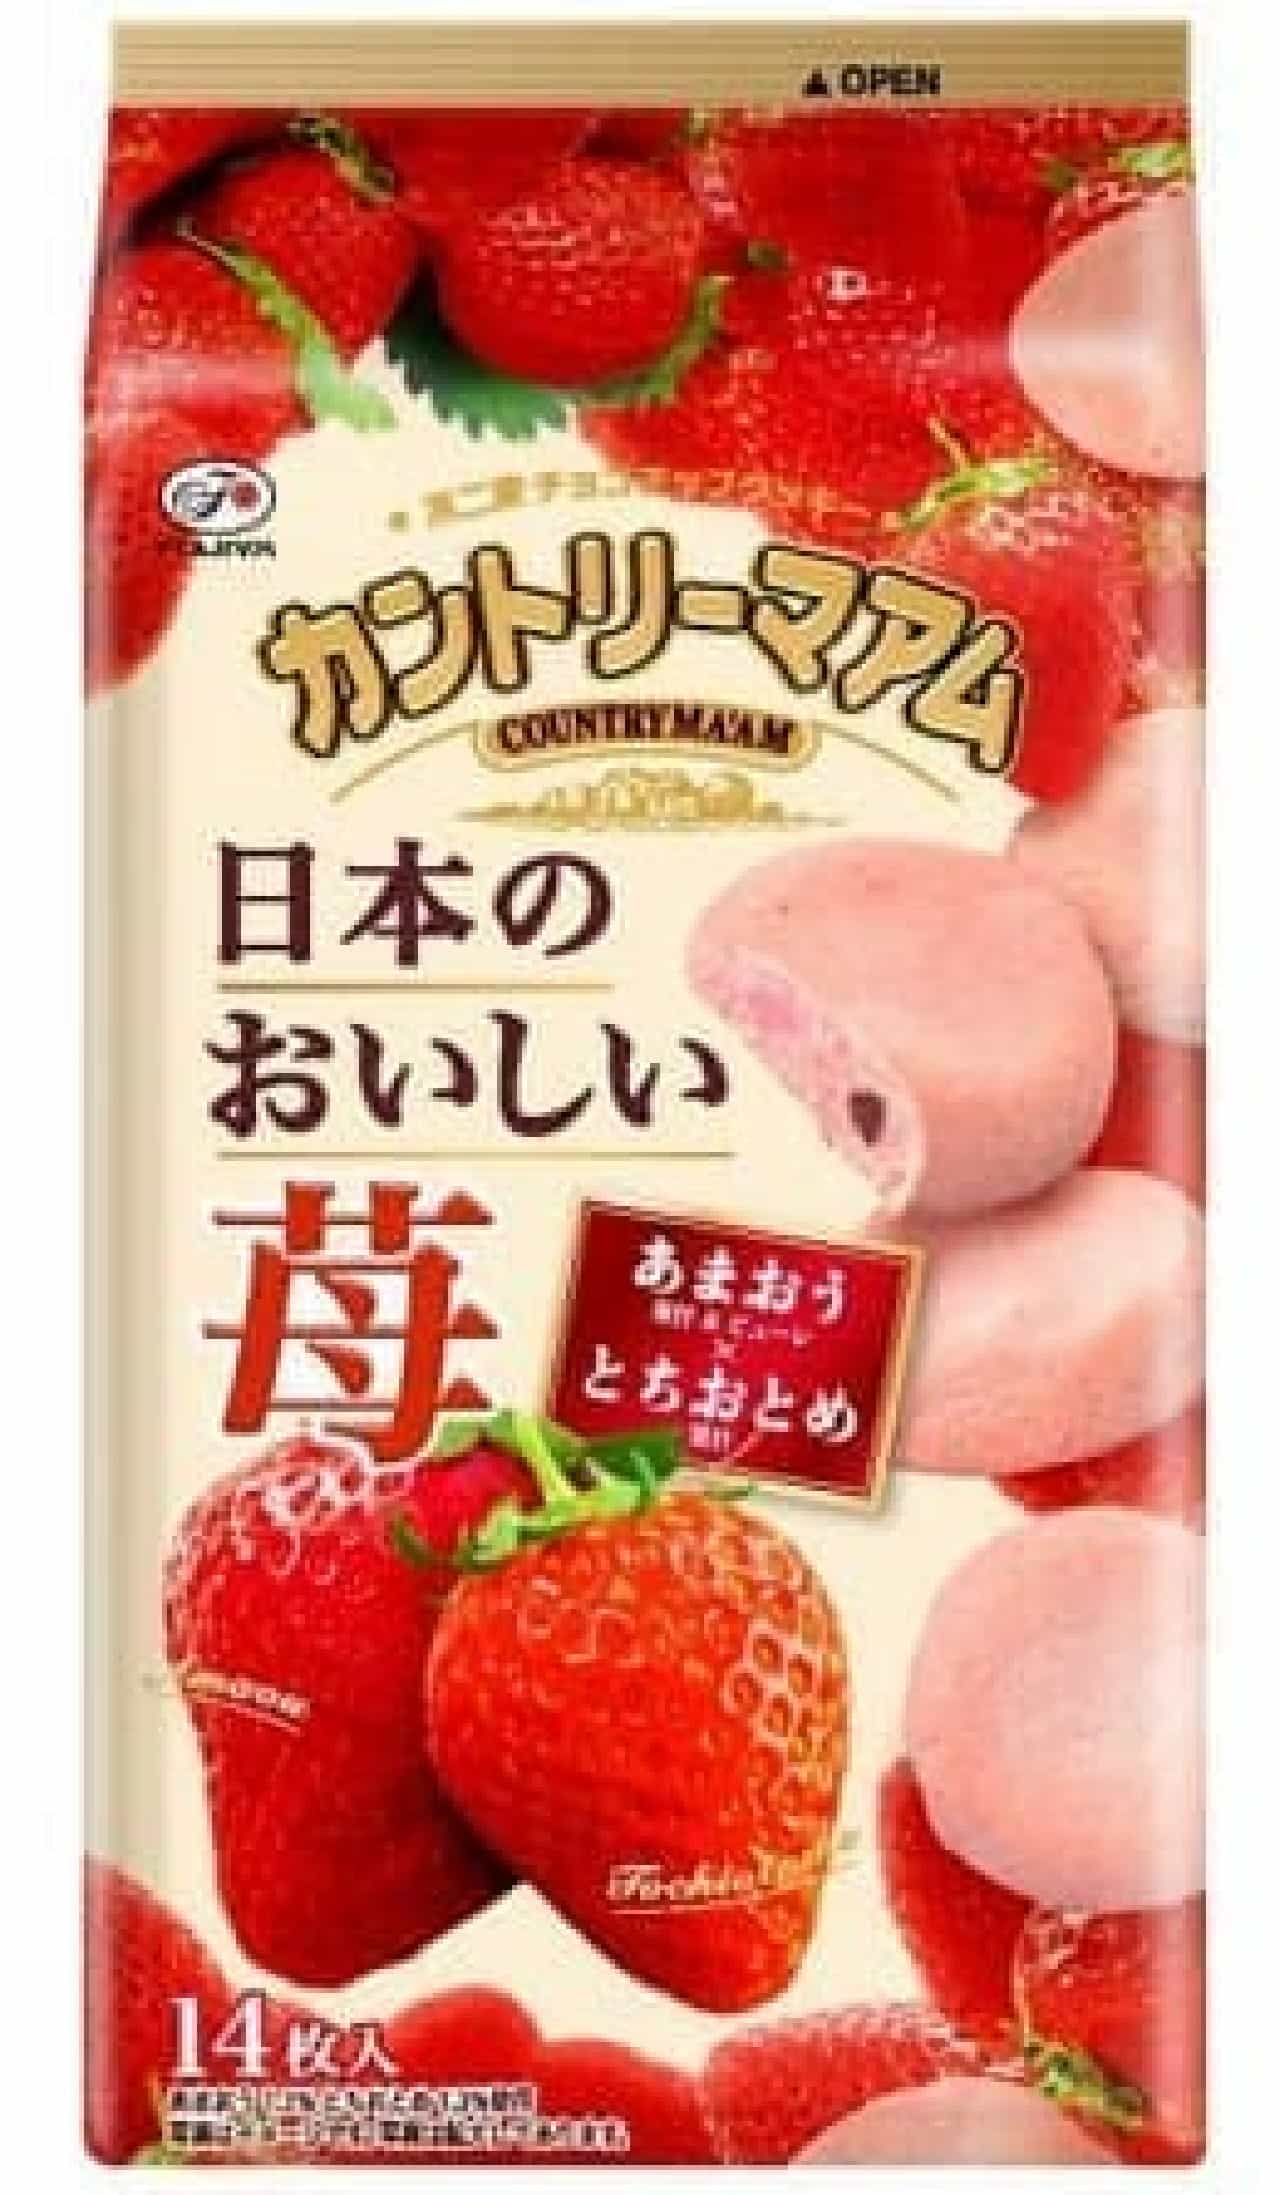 Fujiya "Country Ma'am (Japanese delicious strawberries)"